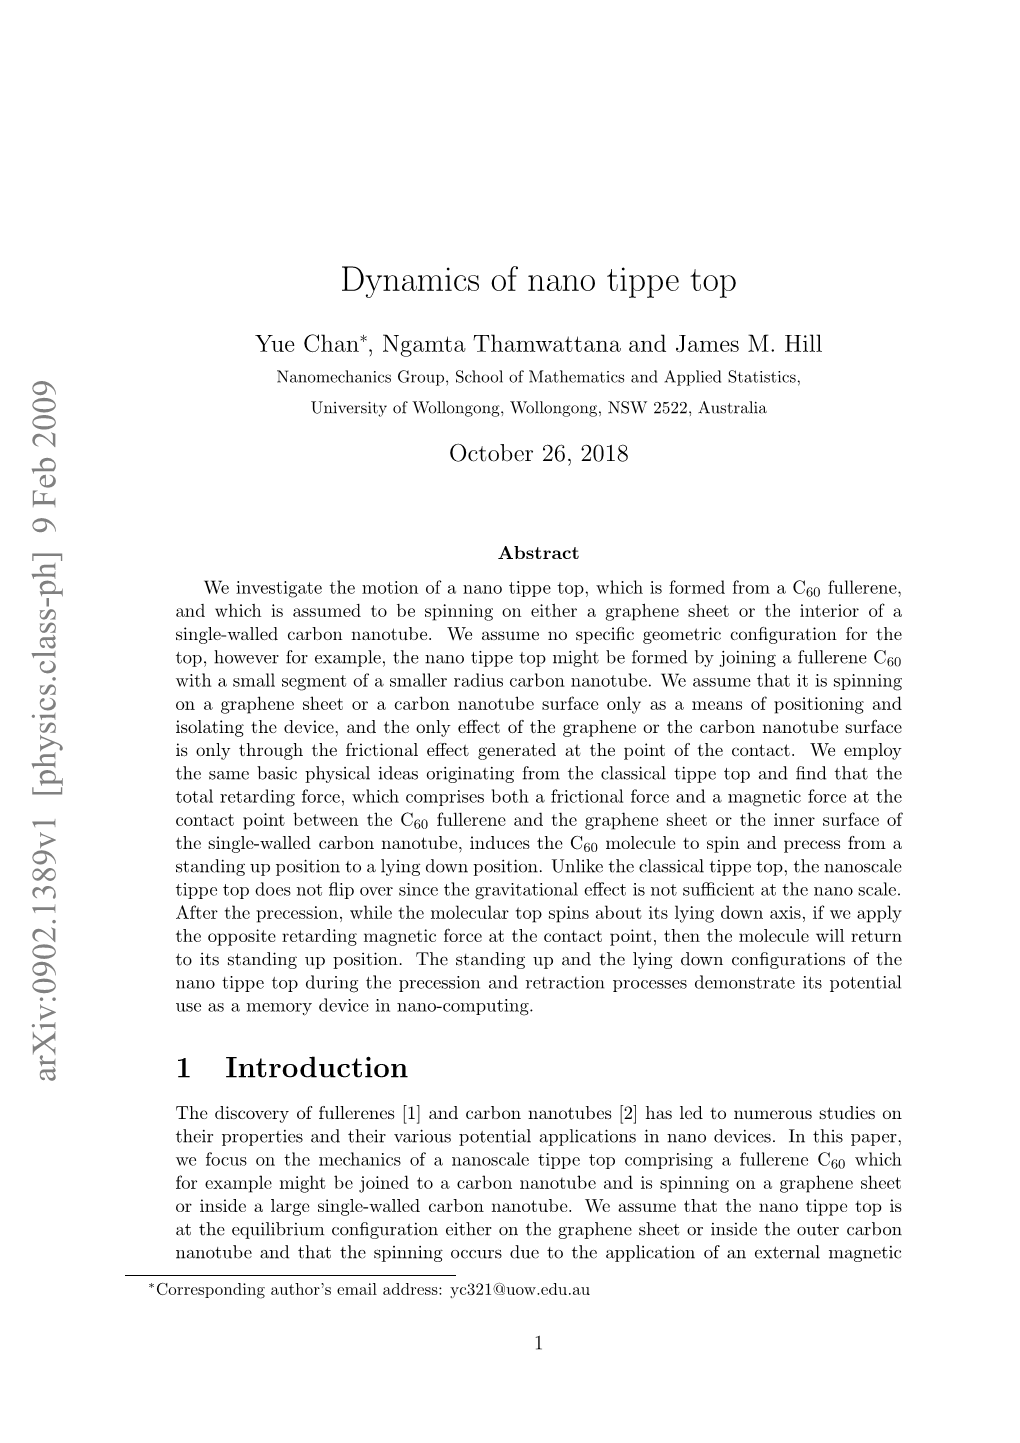 Dynamics of Nano Tippe